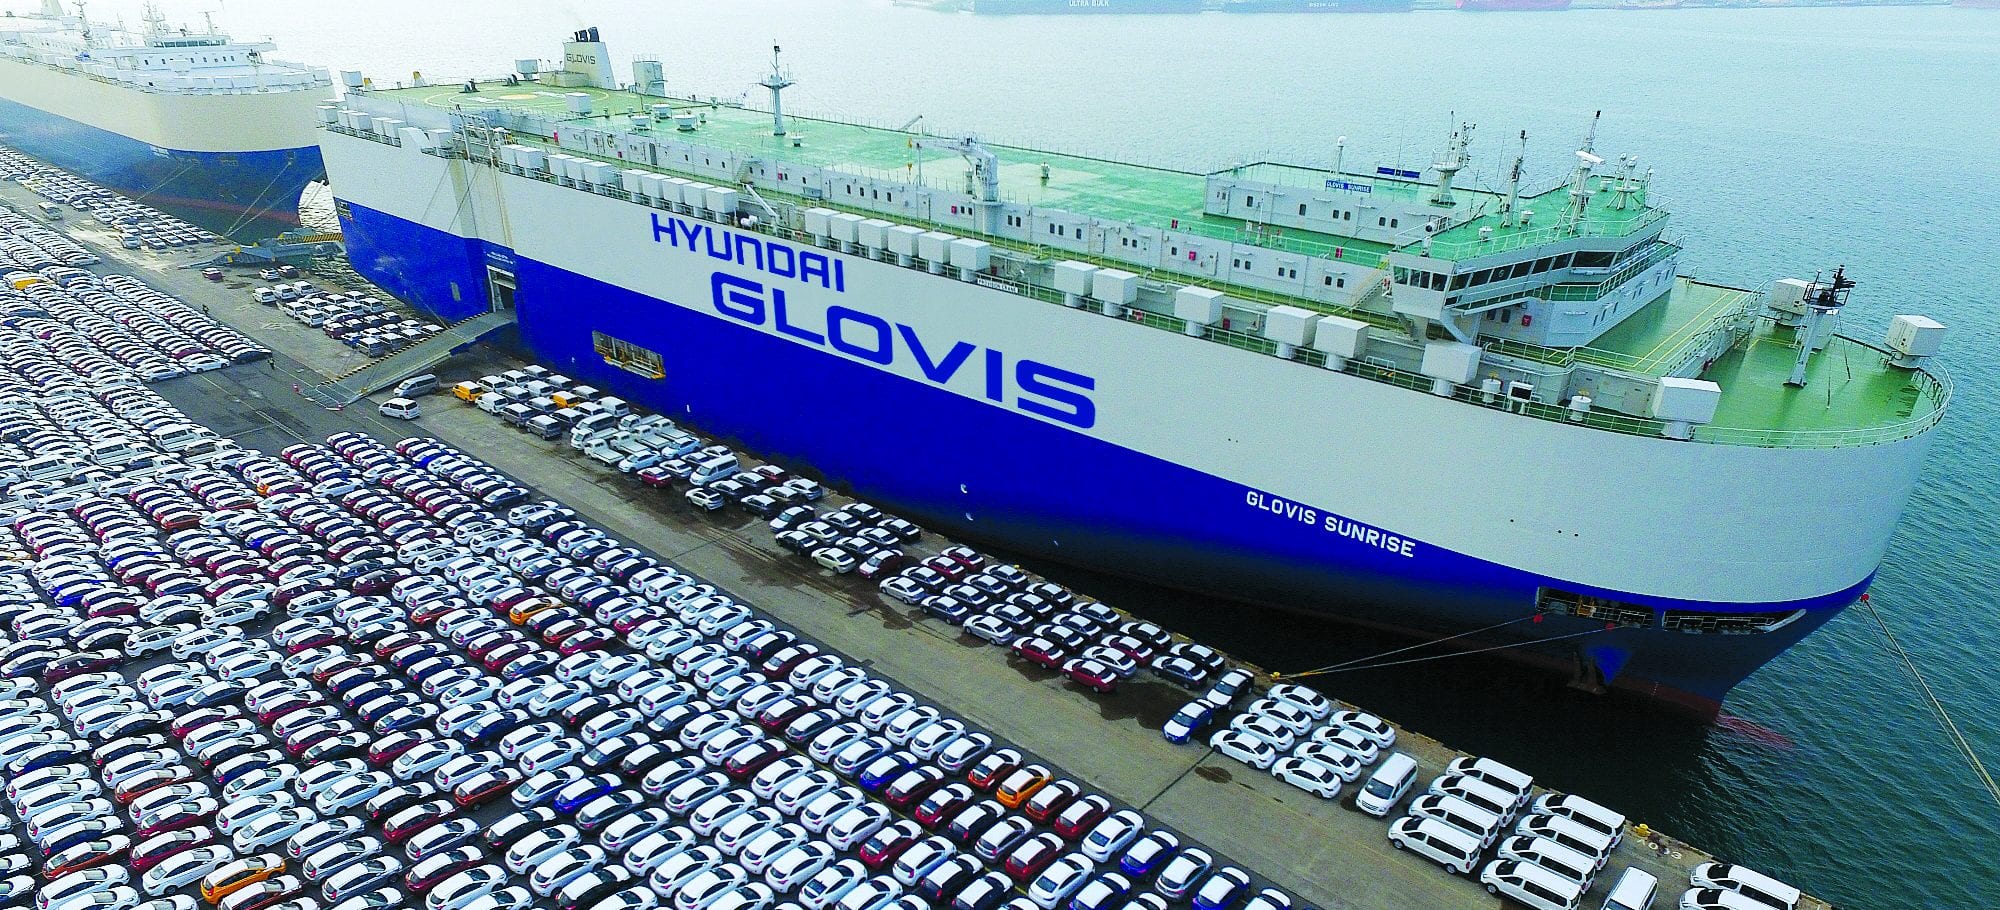 hyunida-glovis-ocean-freight-ship